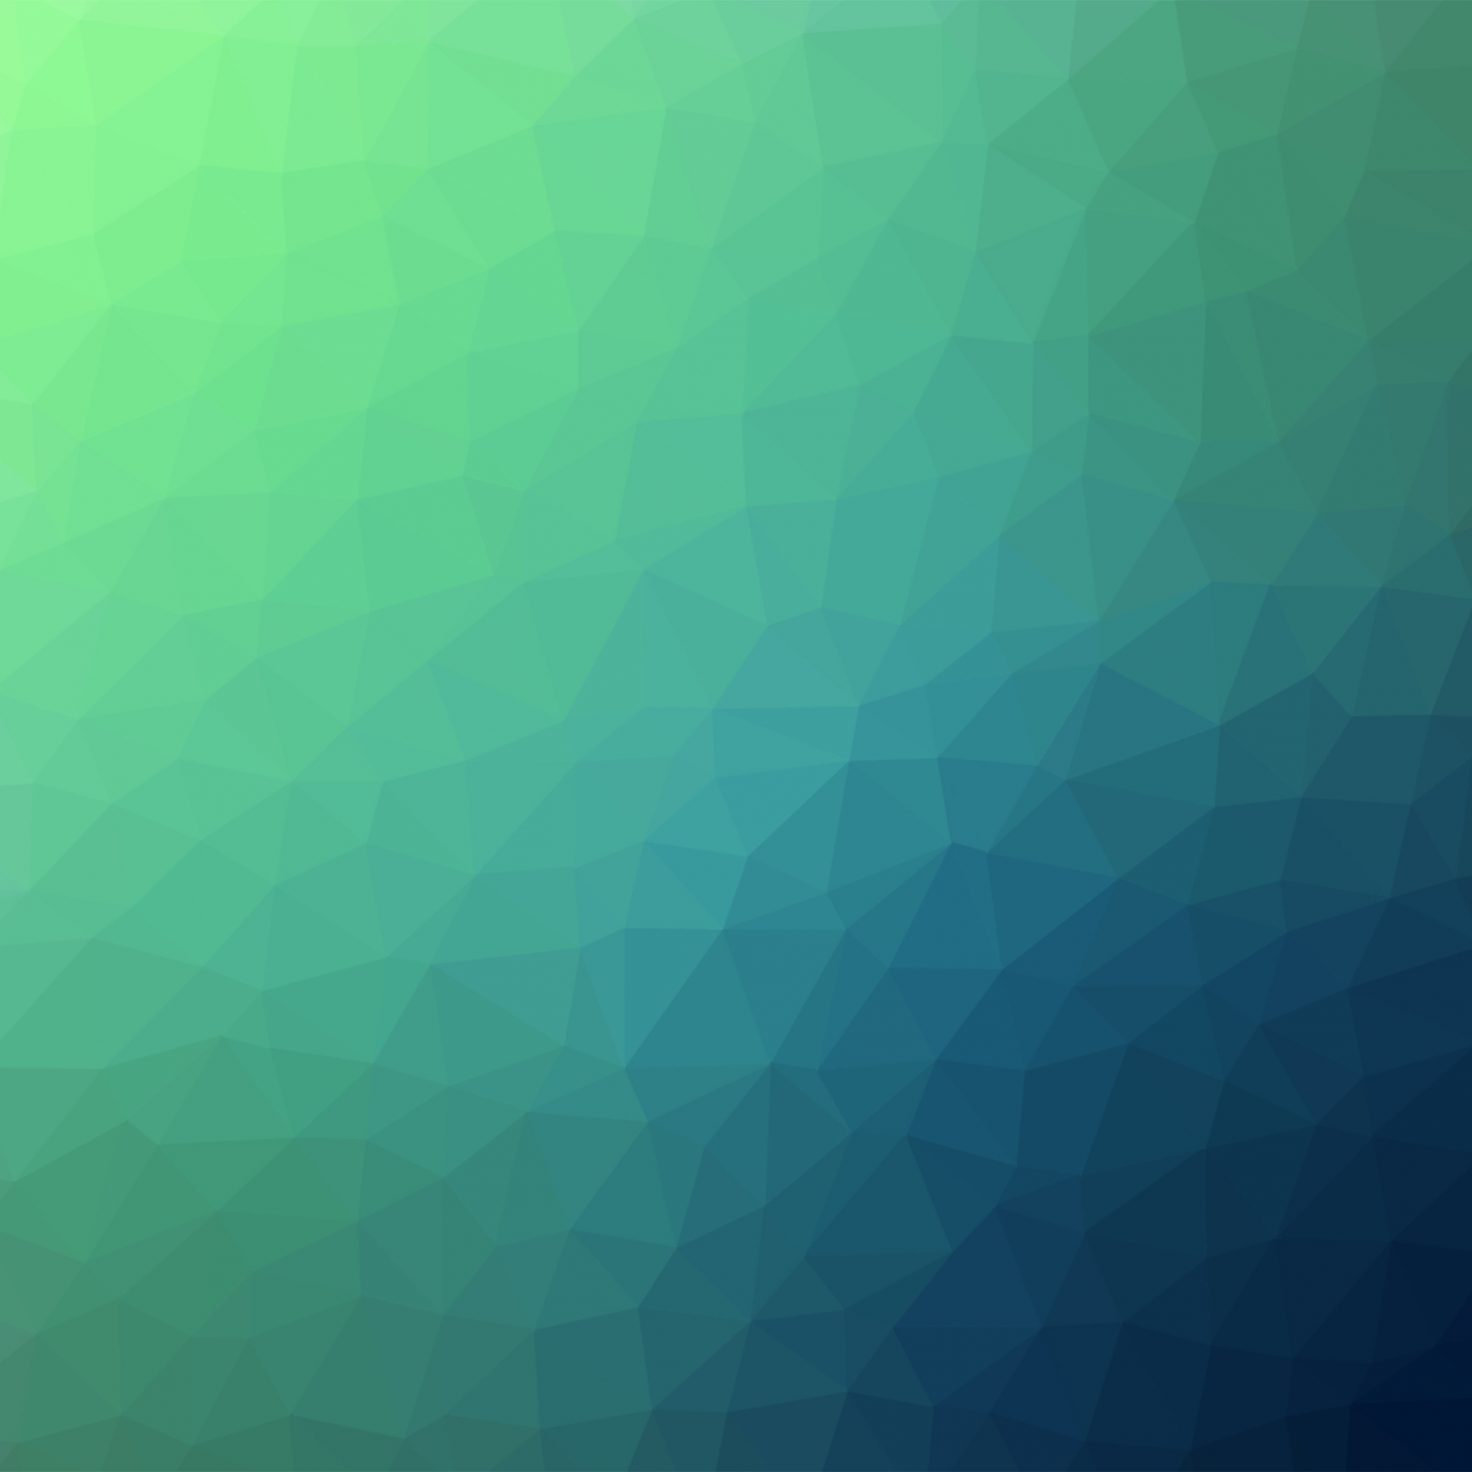 poly-art-abstract-blue-green-pattern-ipad-pro-1472×1472